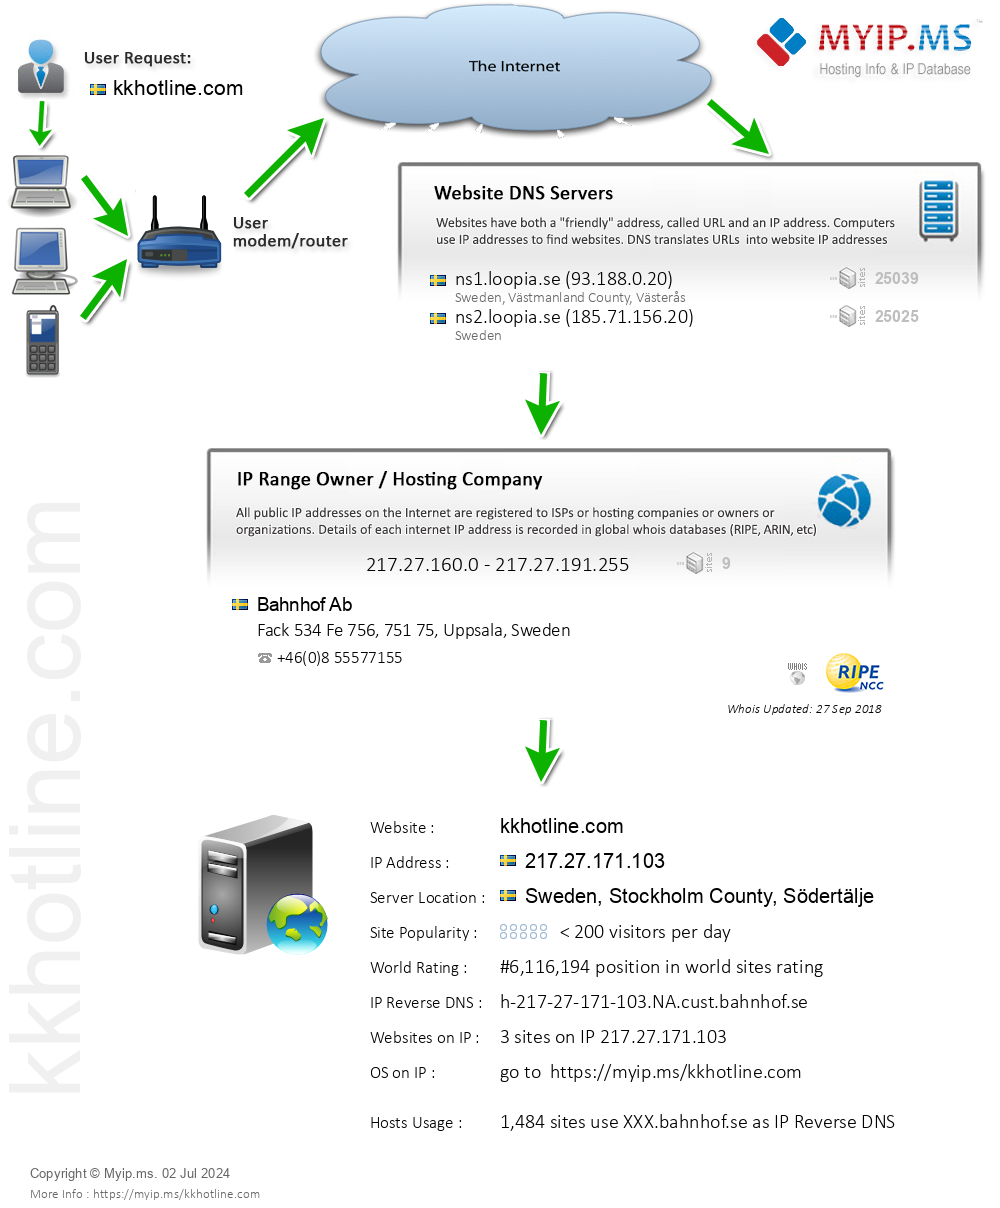 Kkhotline.com - Website Hosting Visual IP Diagram